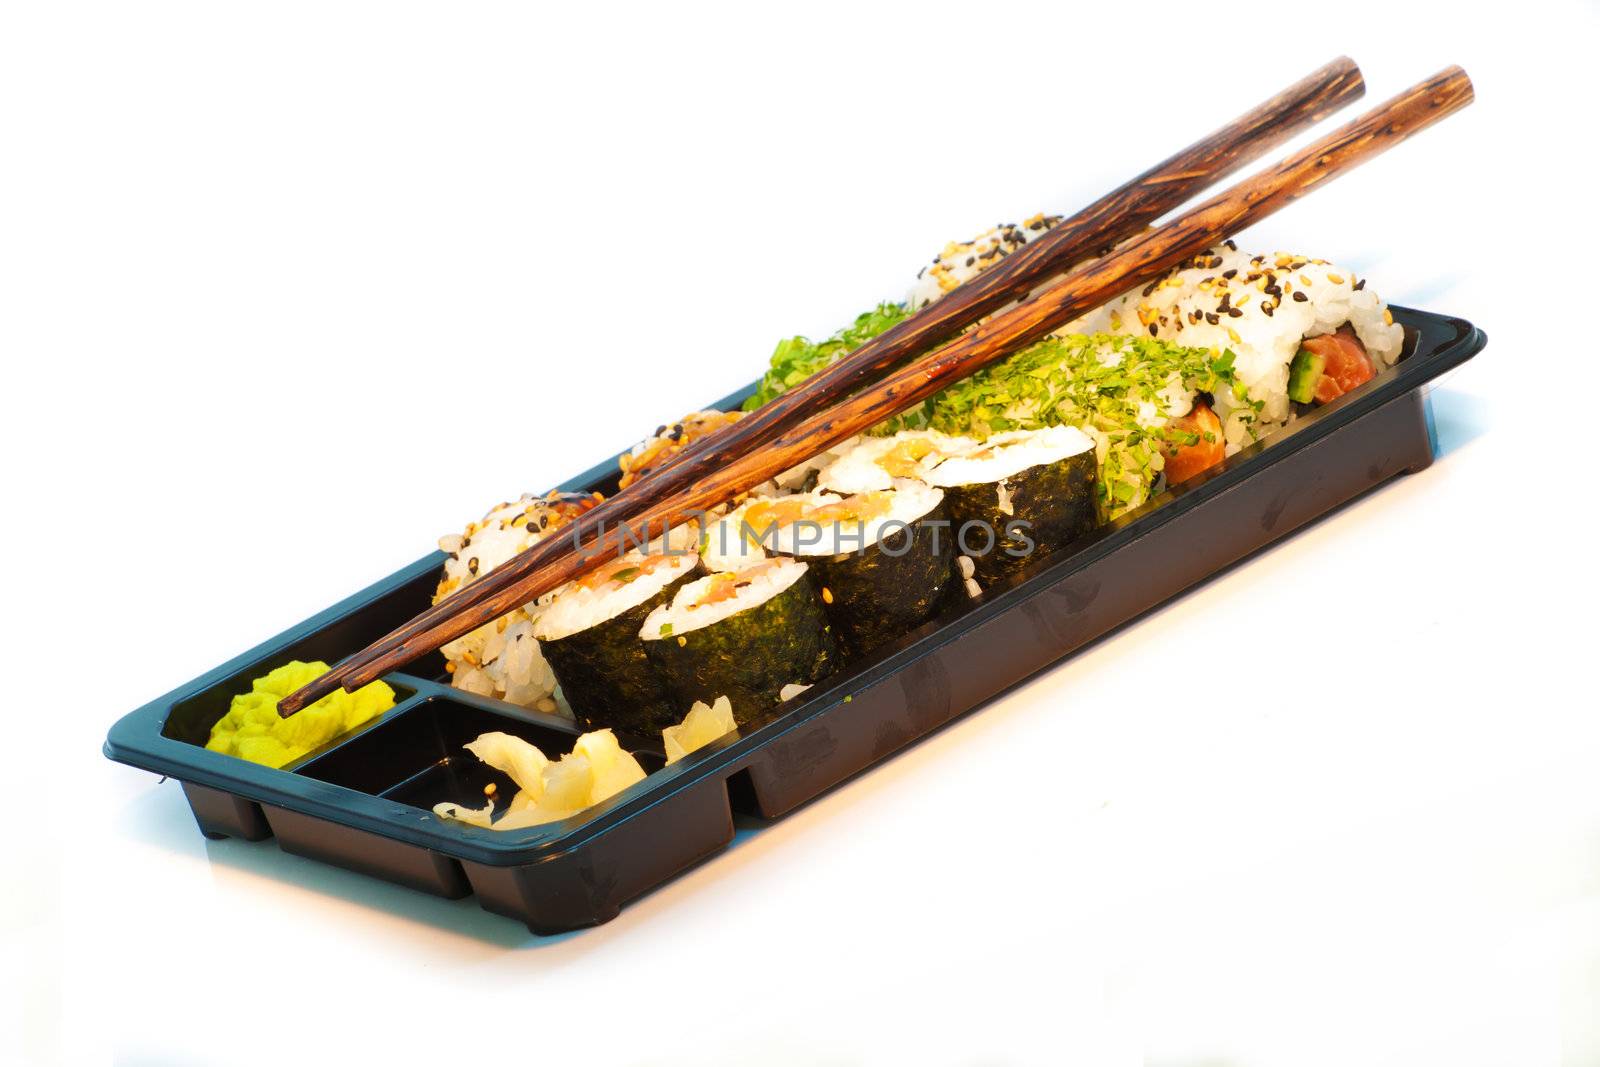 Sushi set with chopsticks in a take away box by Lamarinx